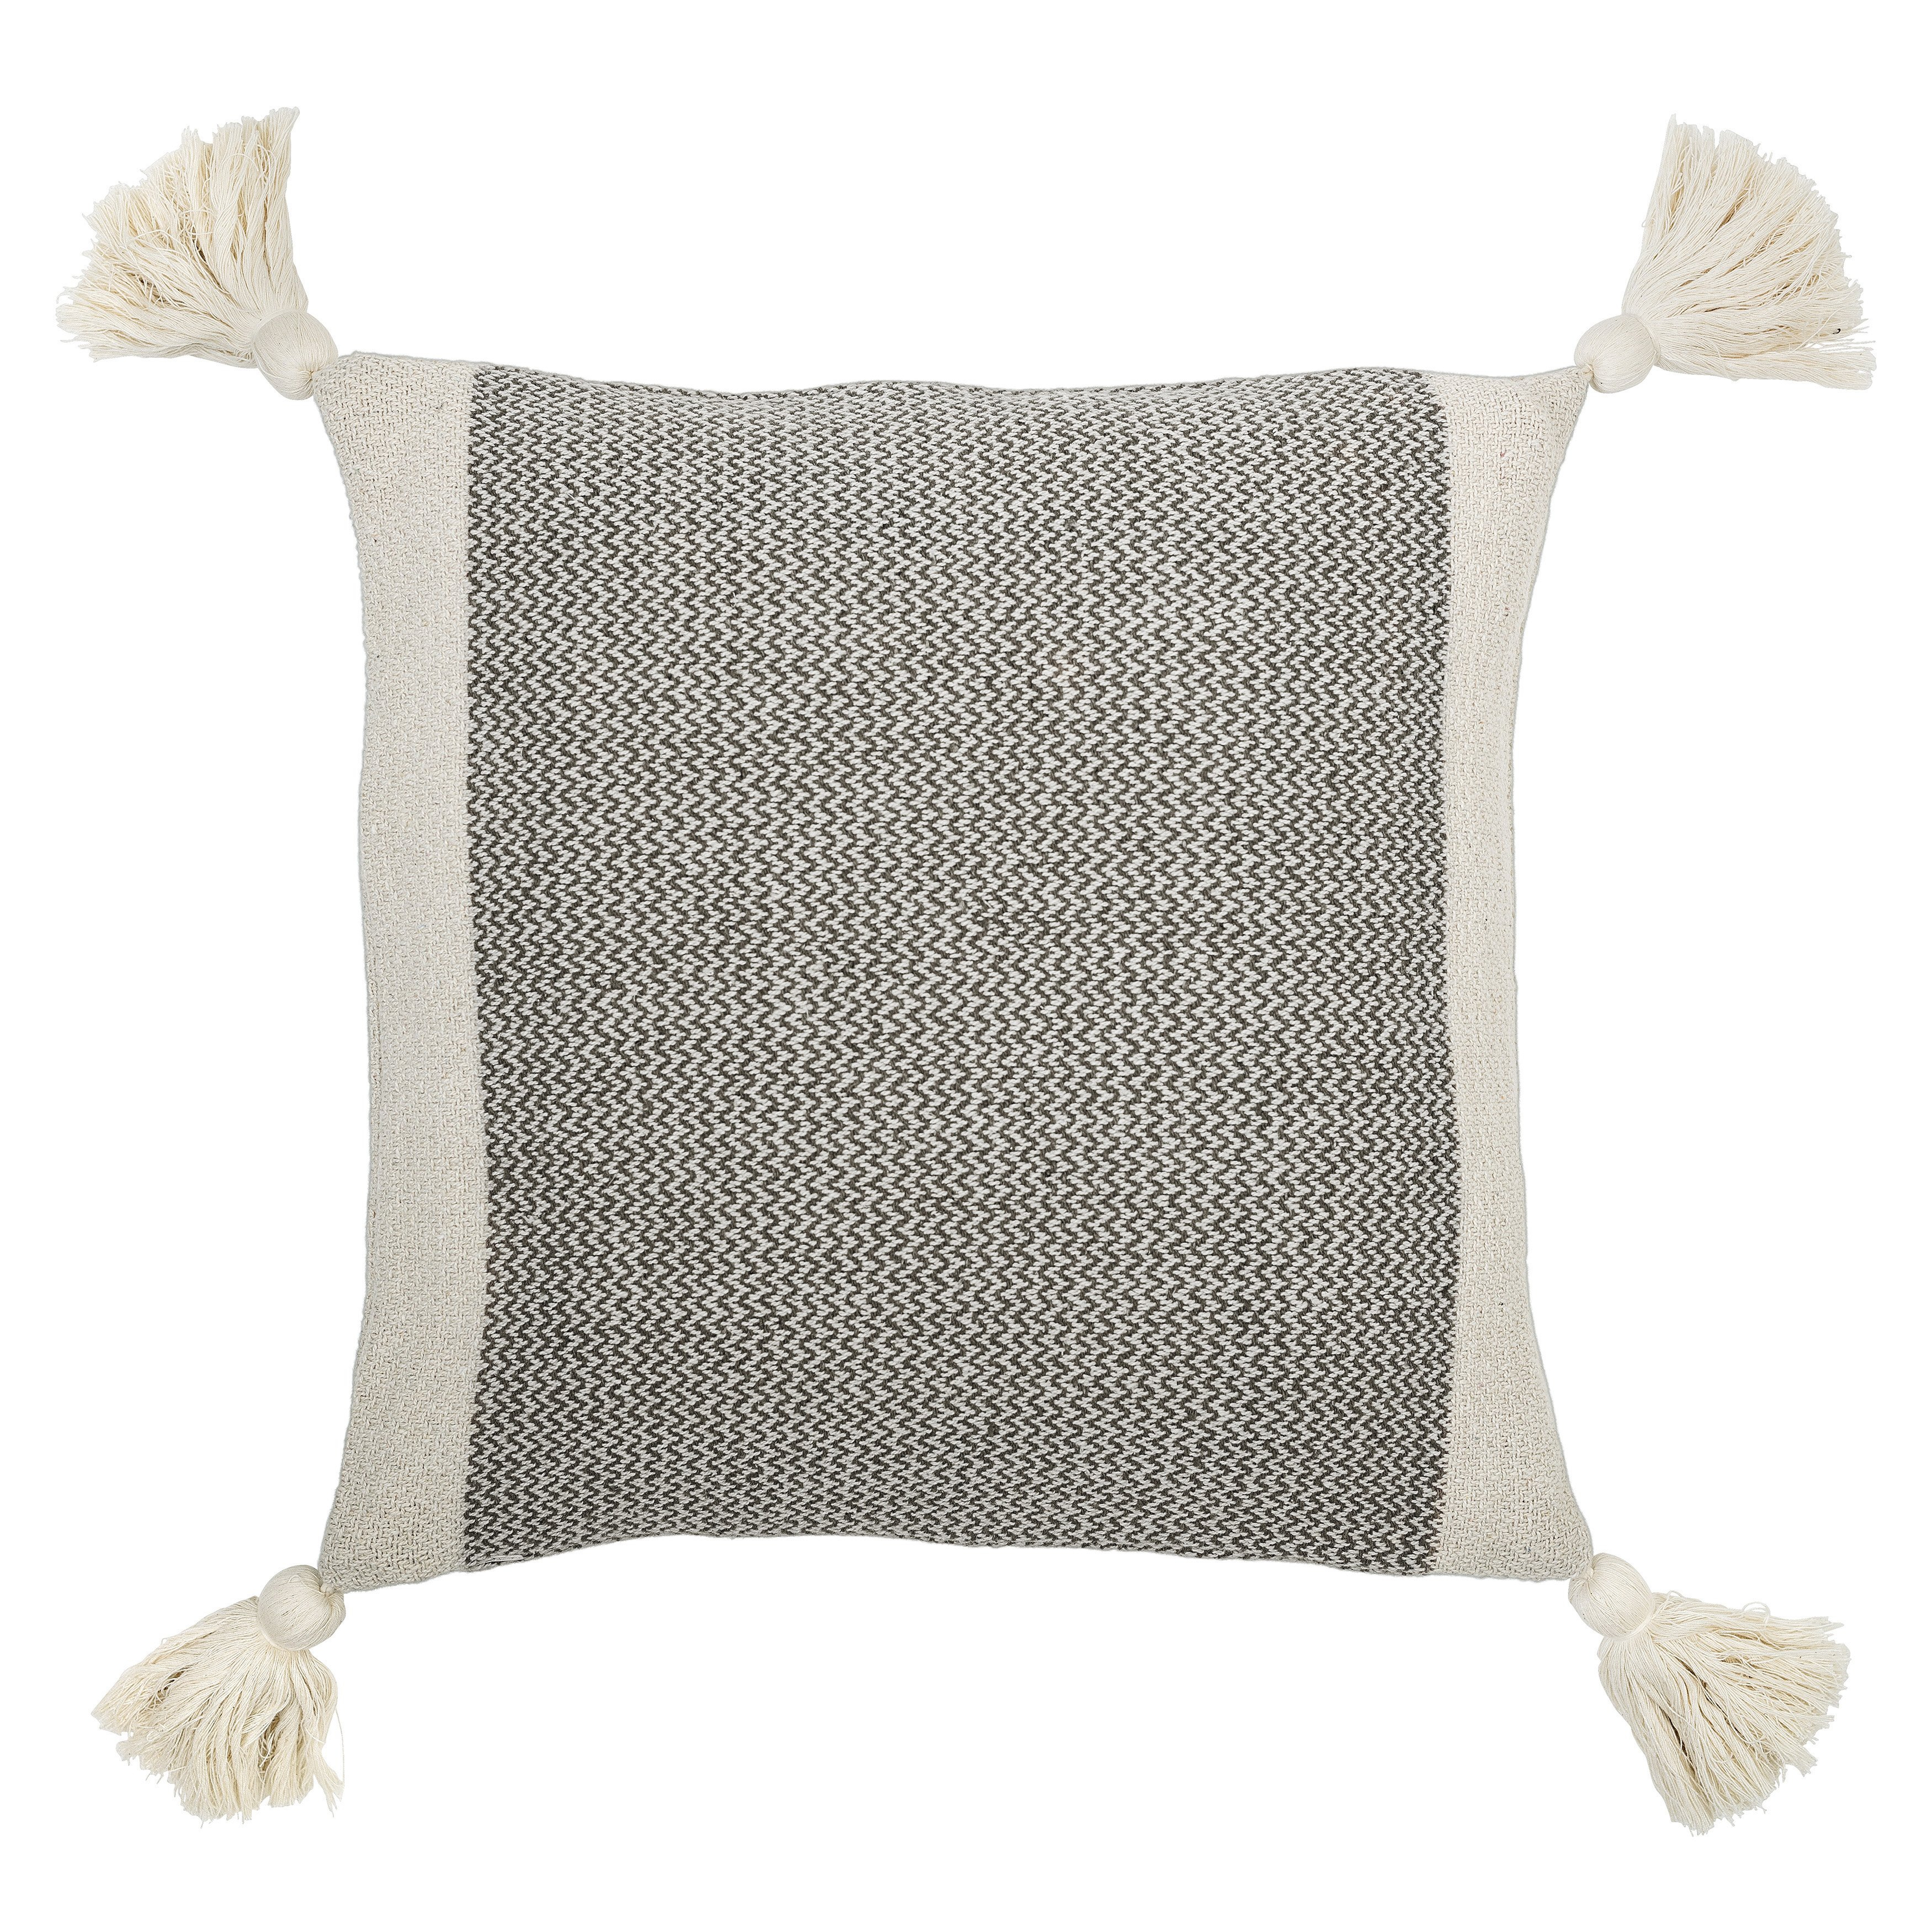 Square Grey & Cream Cotton Blend Pillow with Corner Tassels - Moss & Wilder